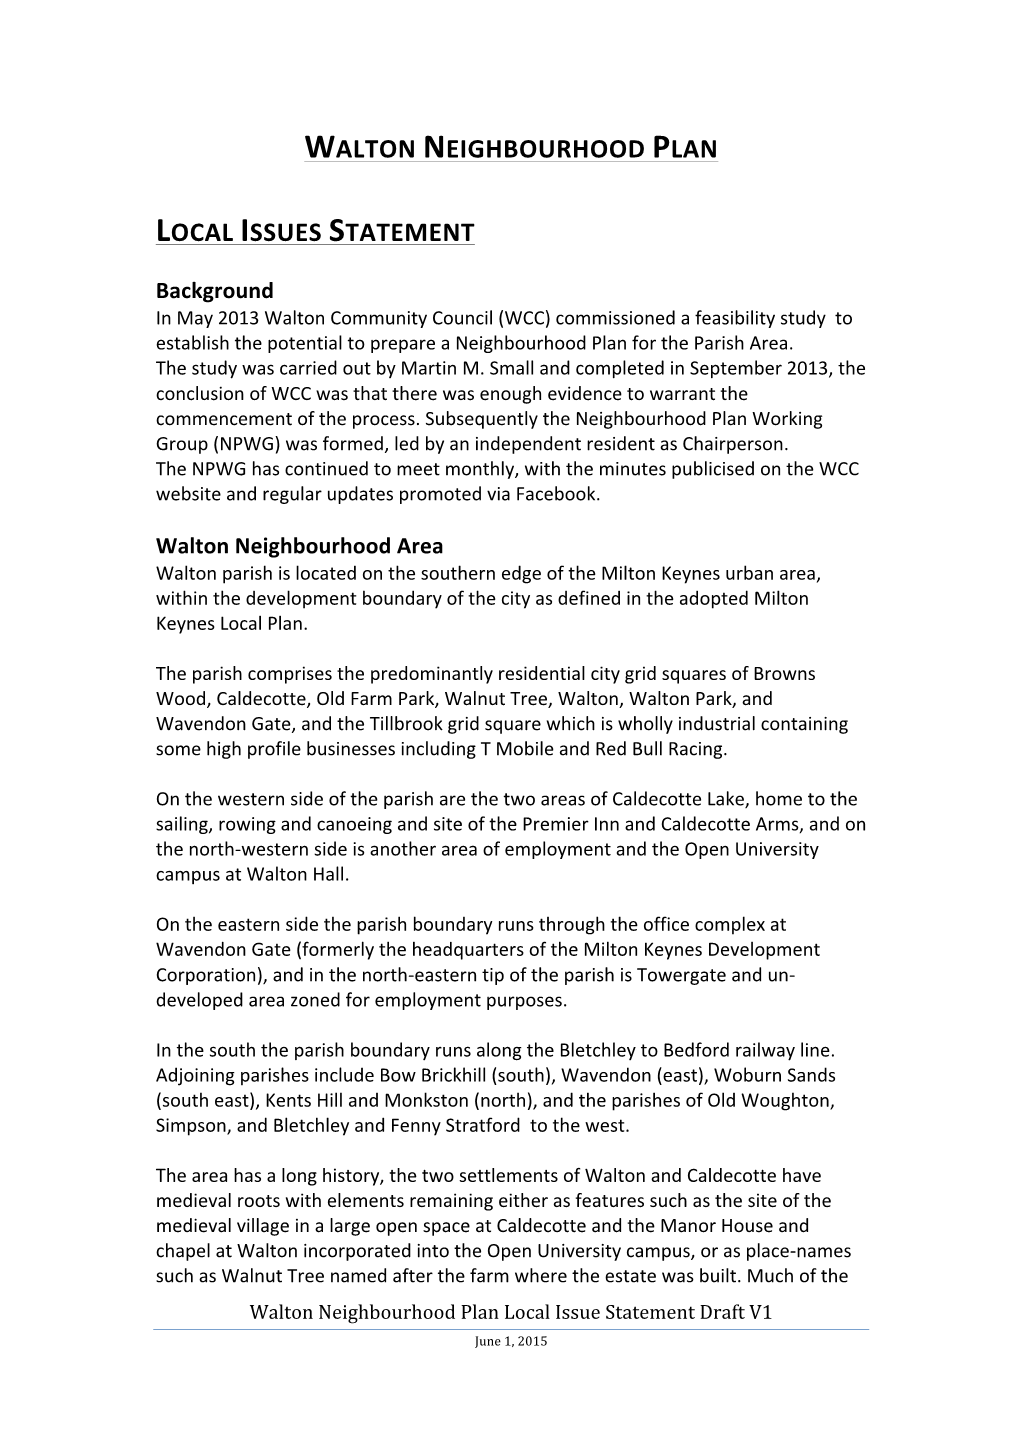 Walton Neighbourhood Plan Local Issues Statement